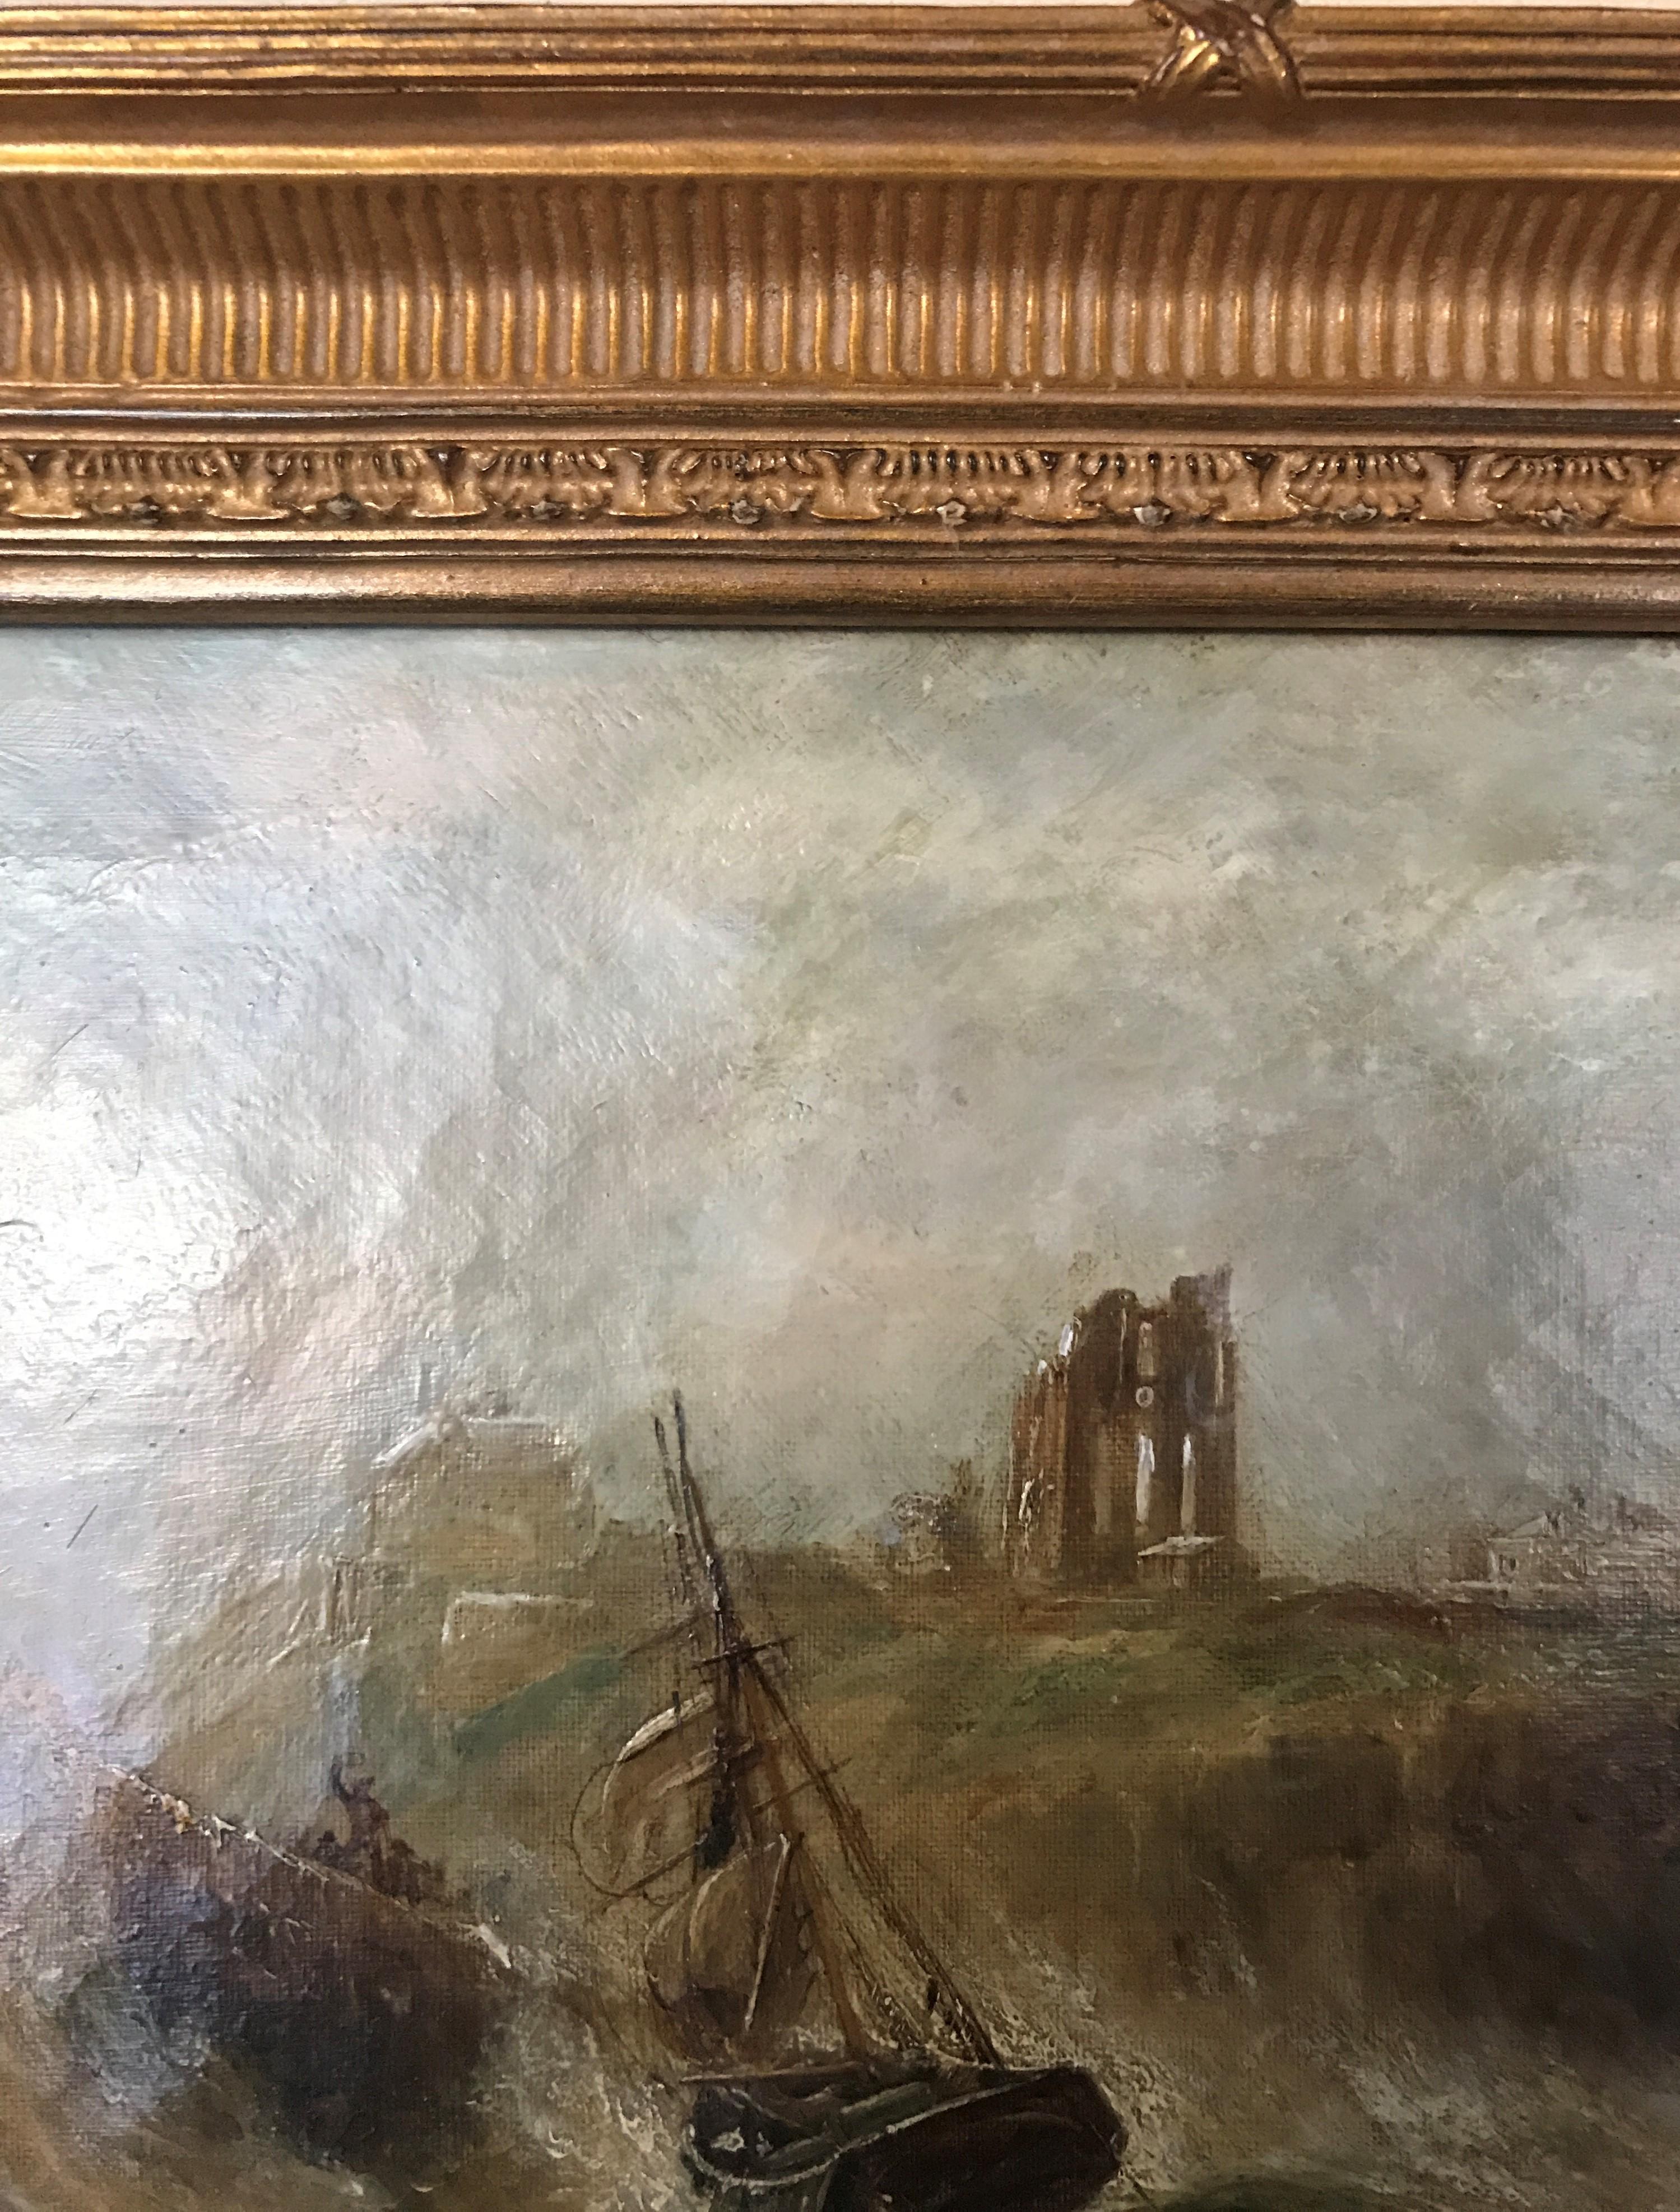 paintings of shipwrecks